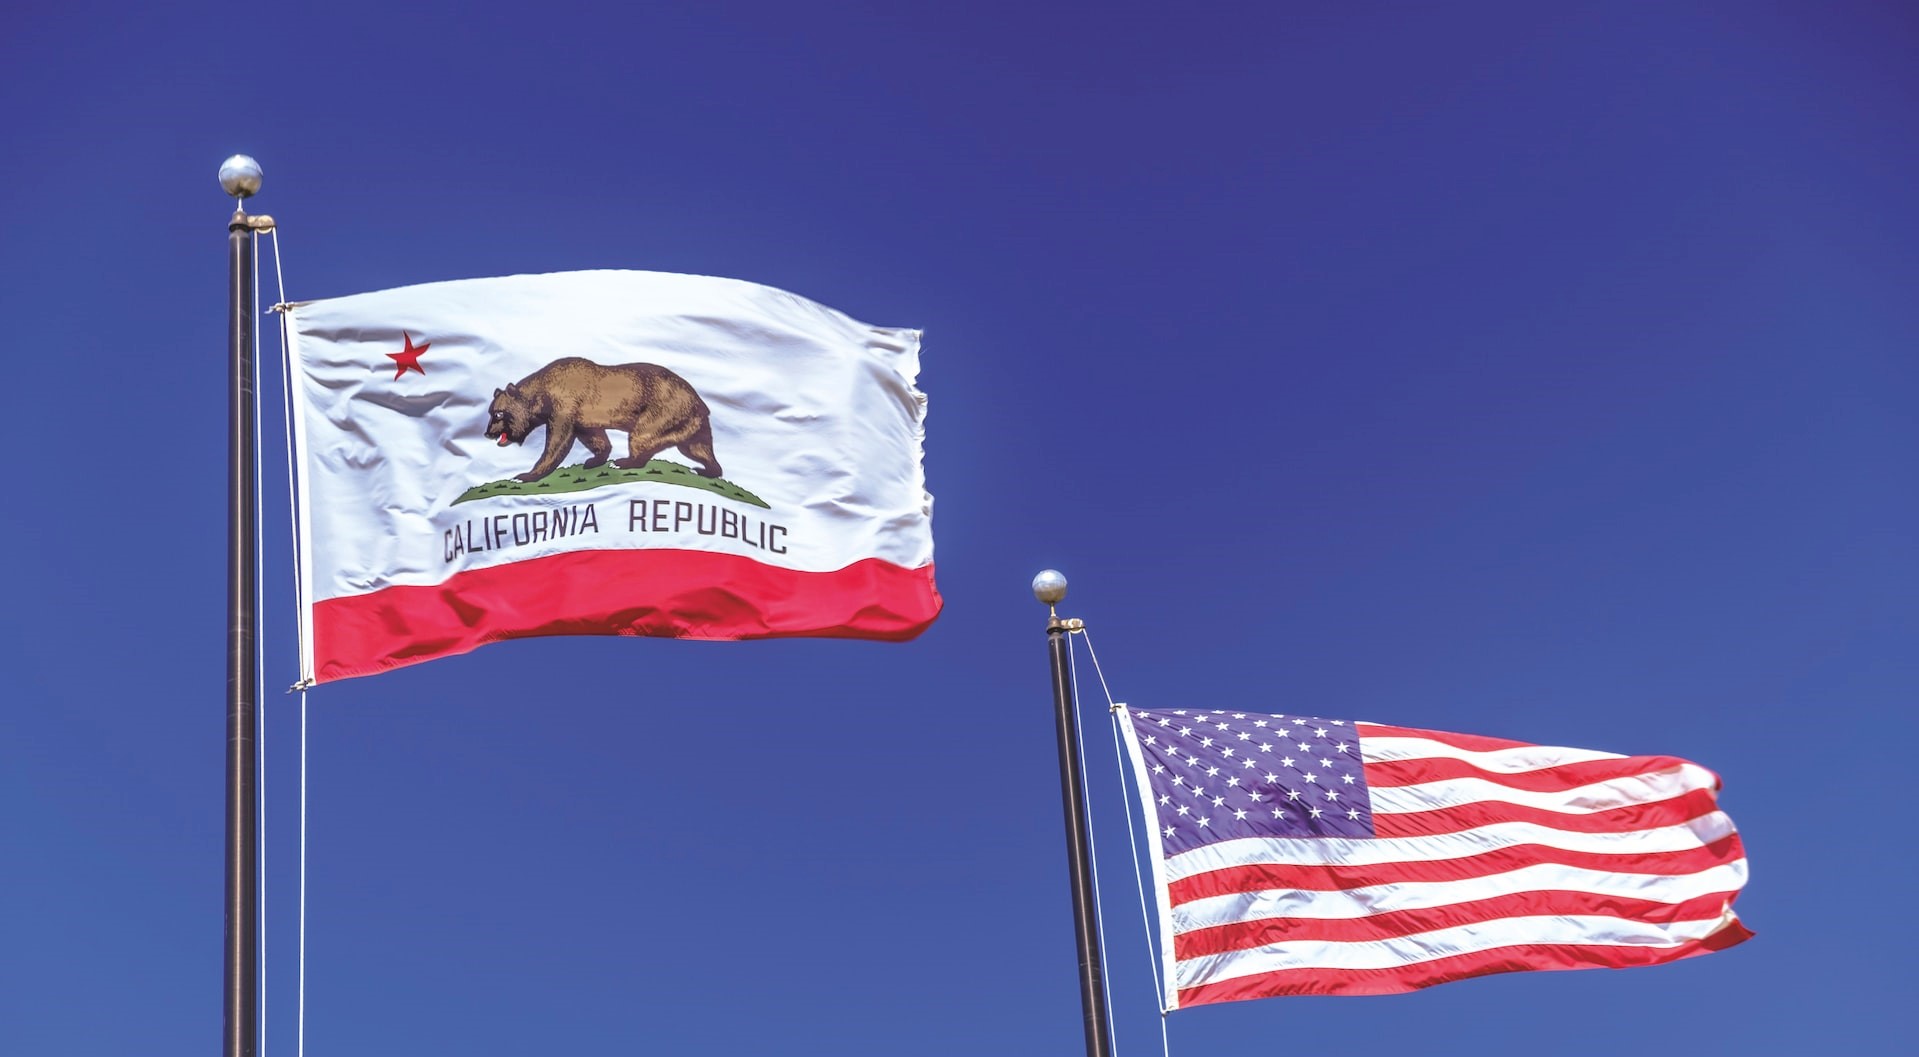 USA & California Flags | Kids Car Donations